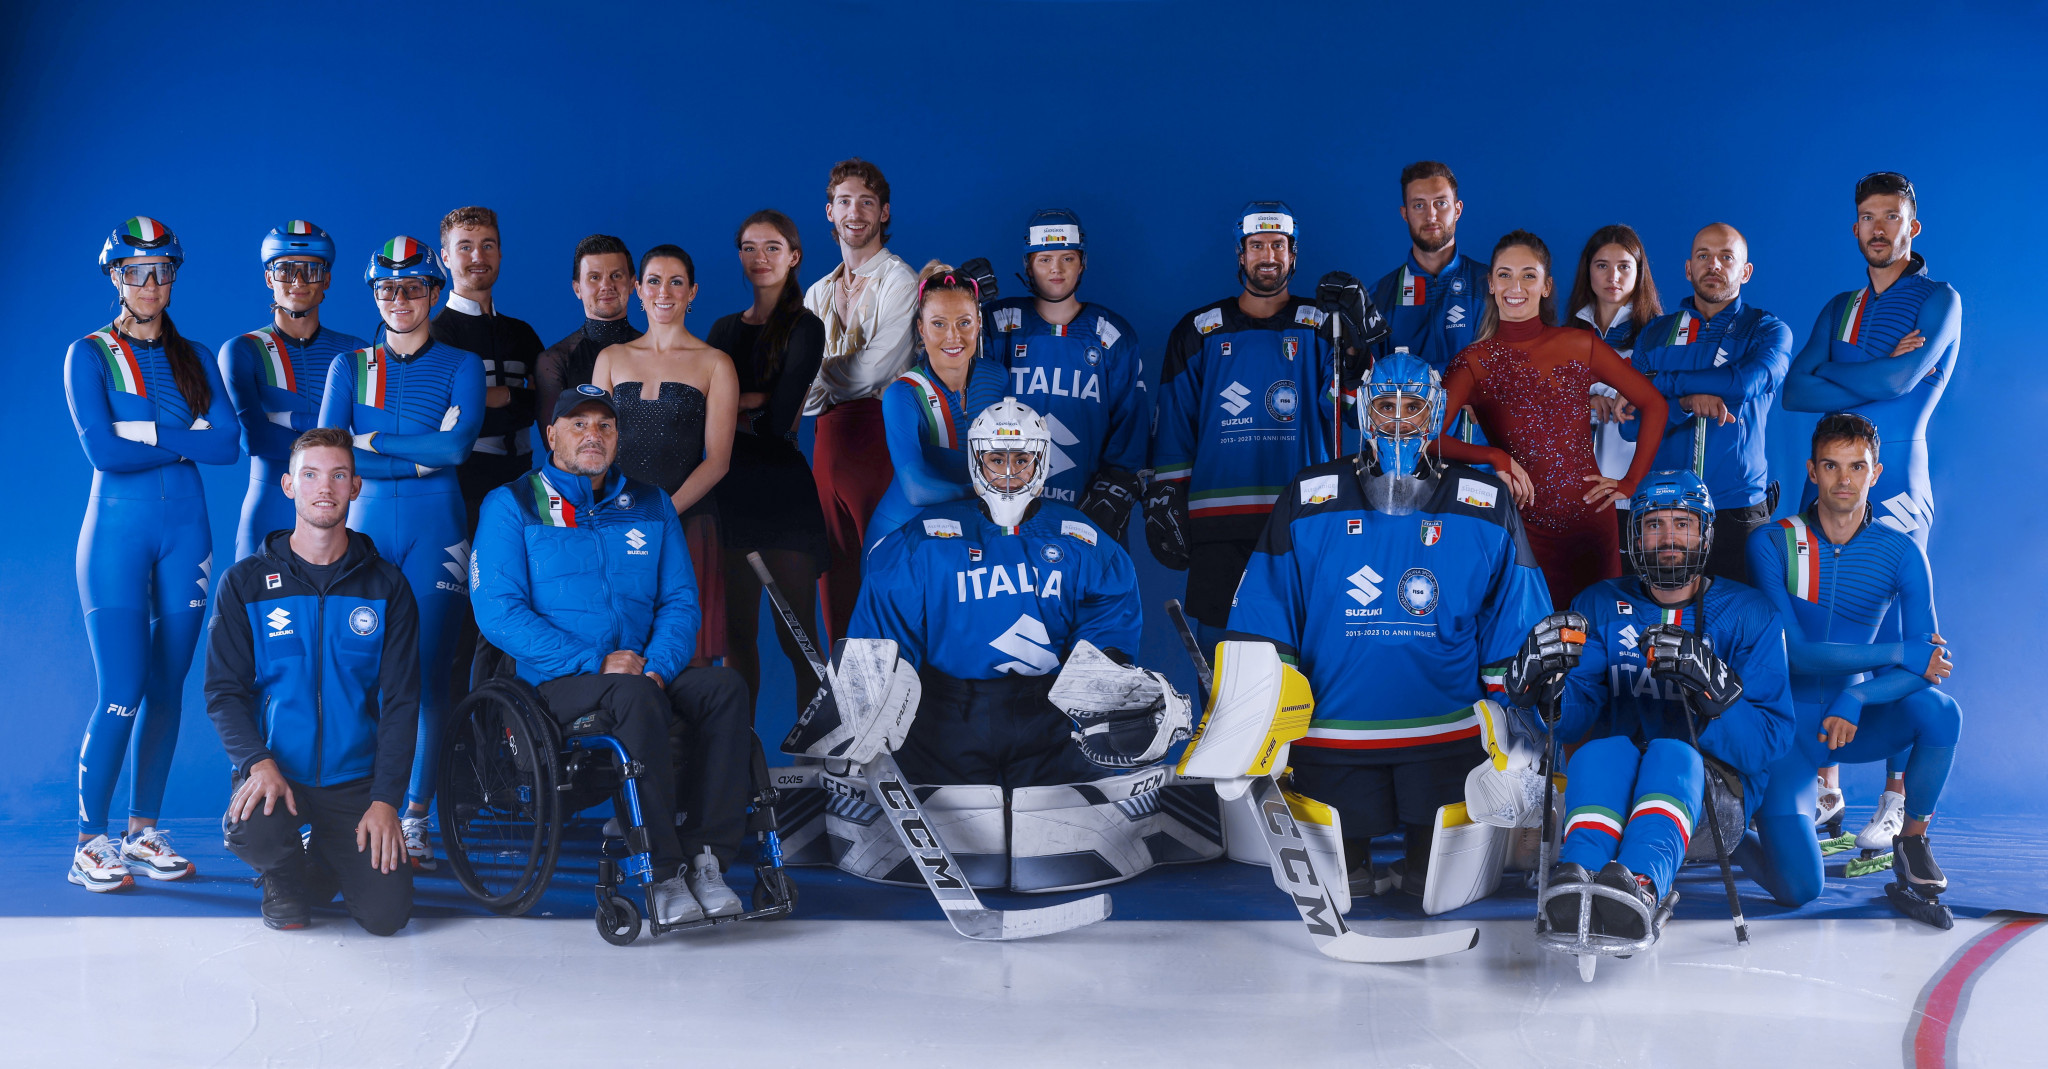 The Italian Ice Sports Federation has renewed its partnership with FILA ©FILA